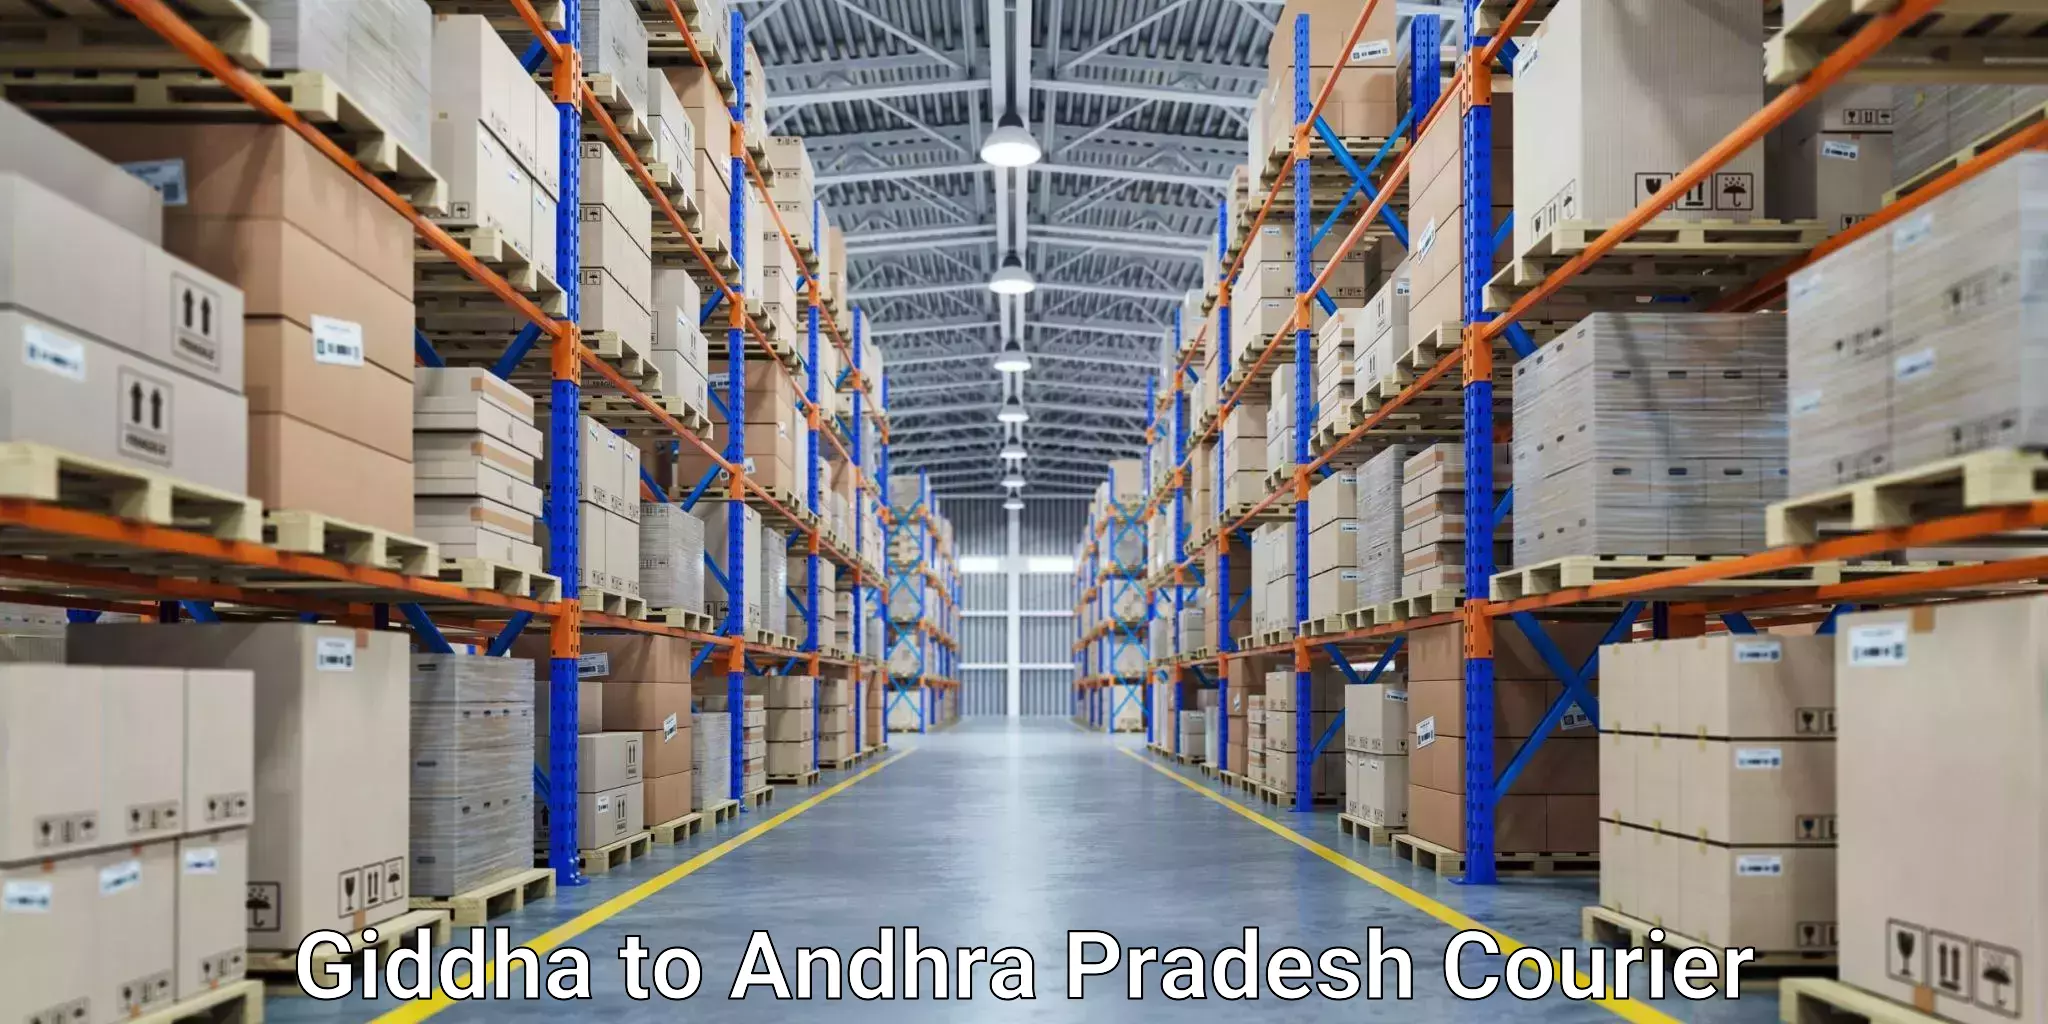 Custom courier packaging Giddha to Tripuranthakam